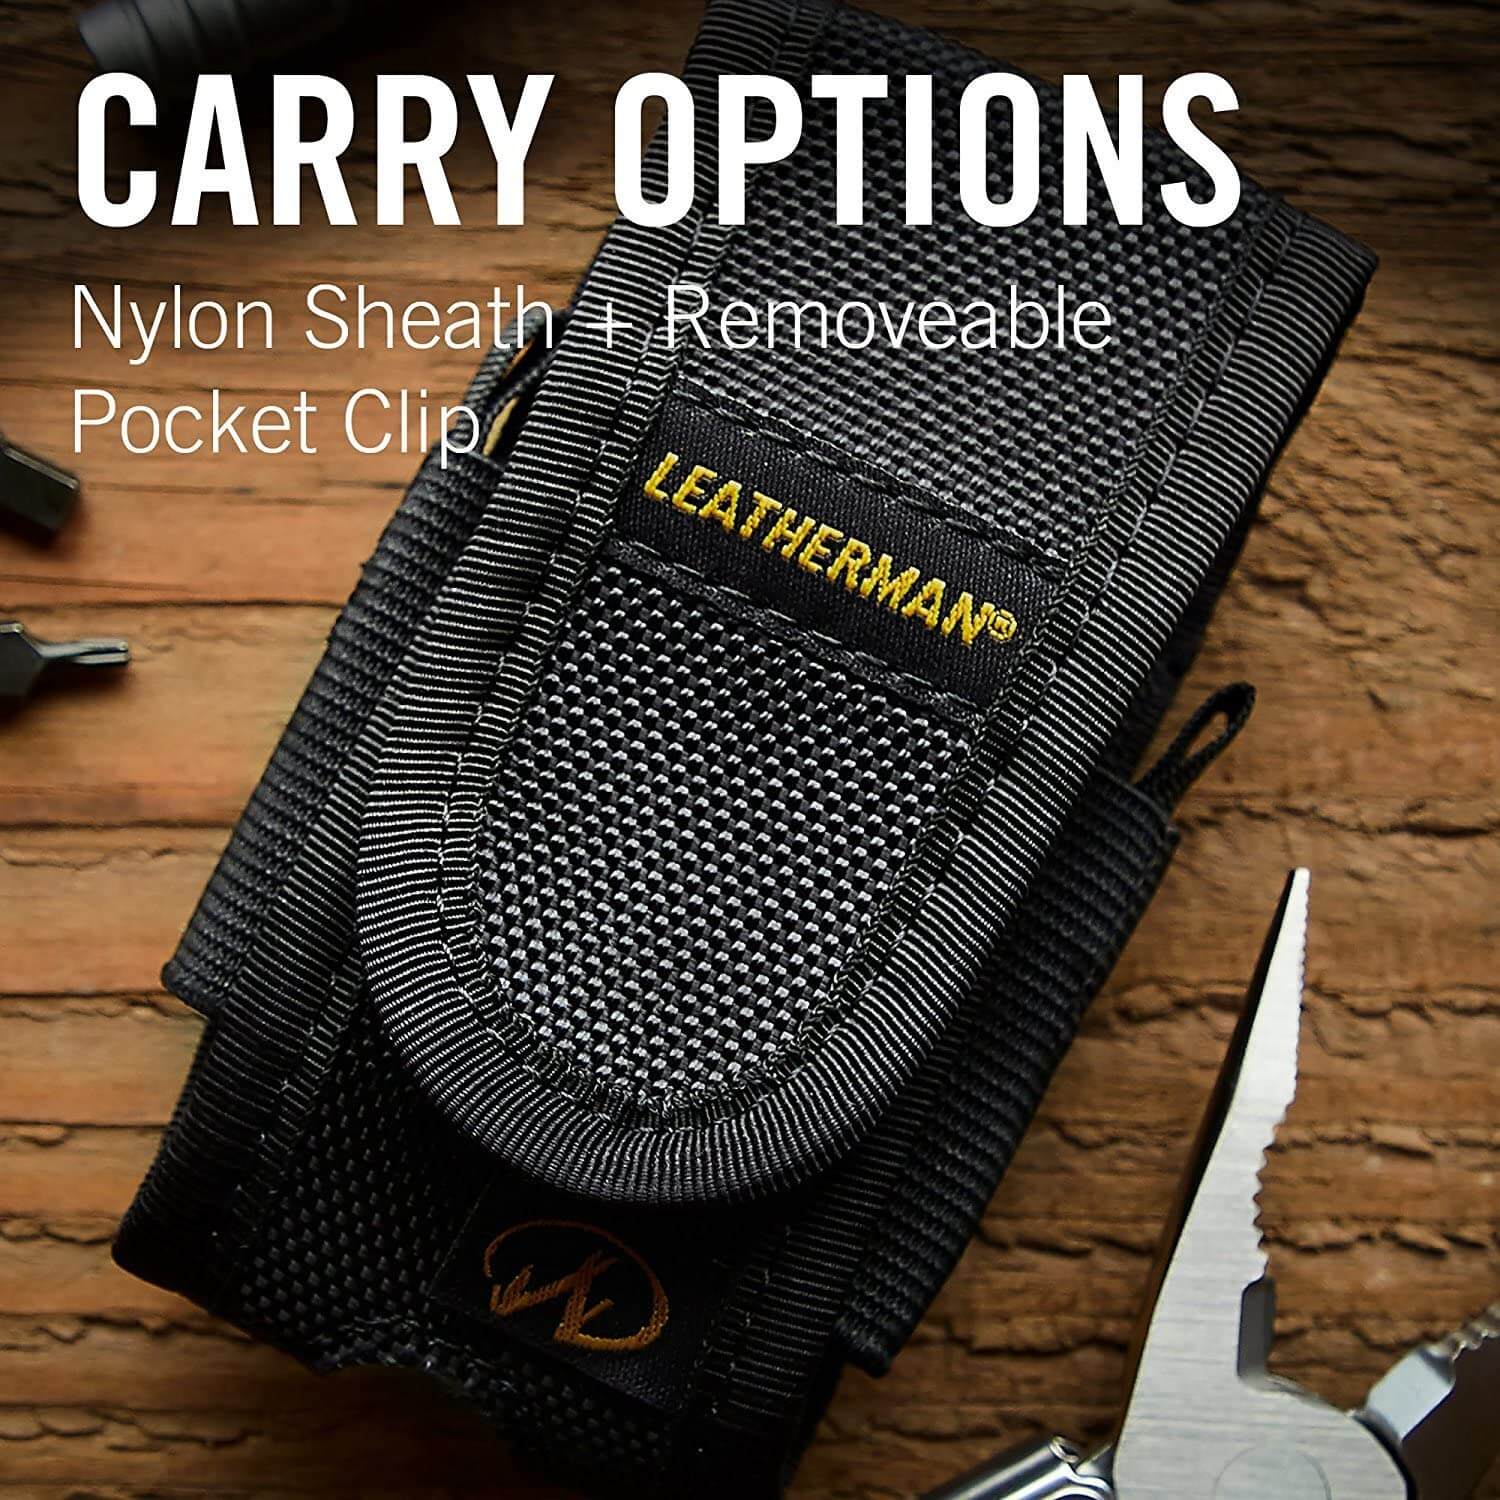 Carry options nylon sheath